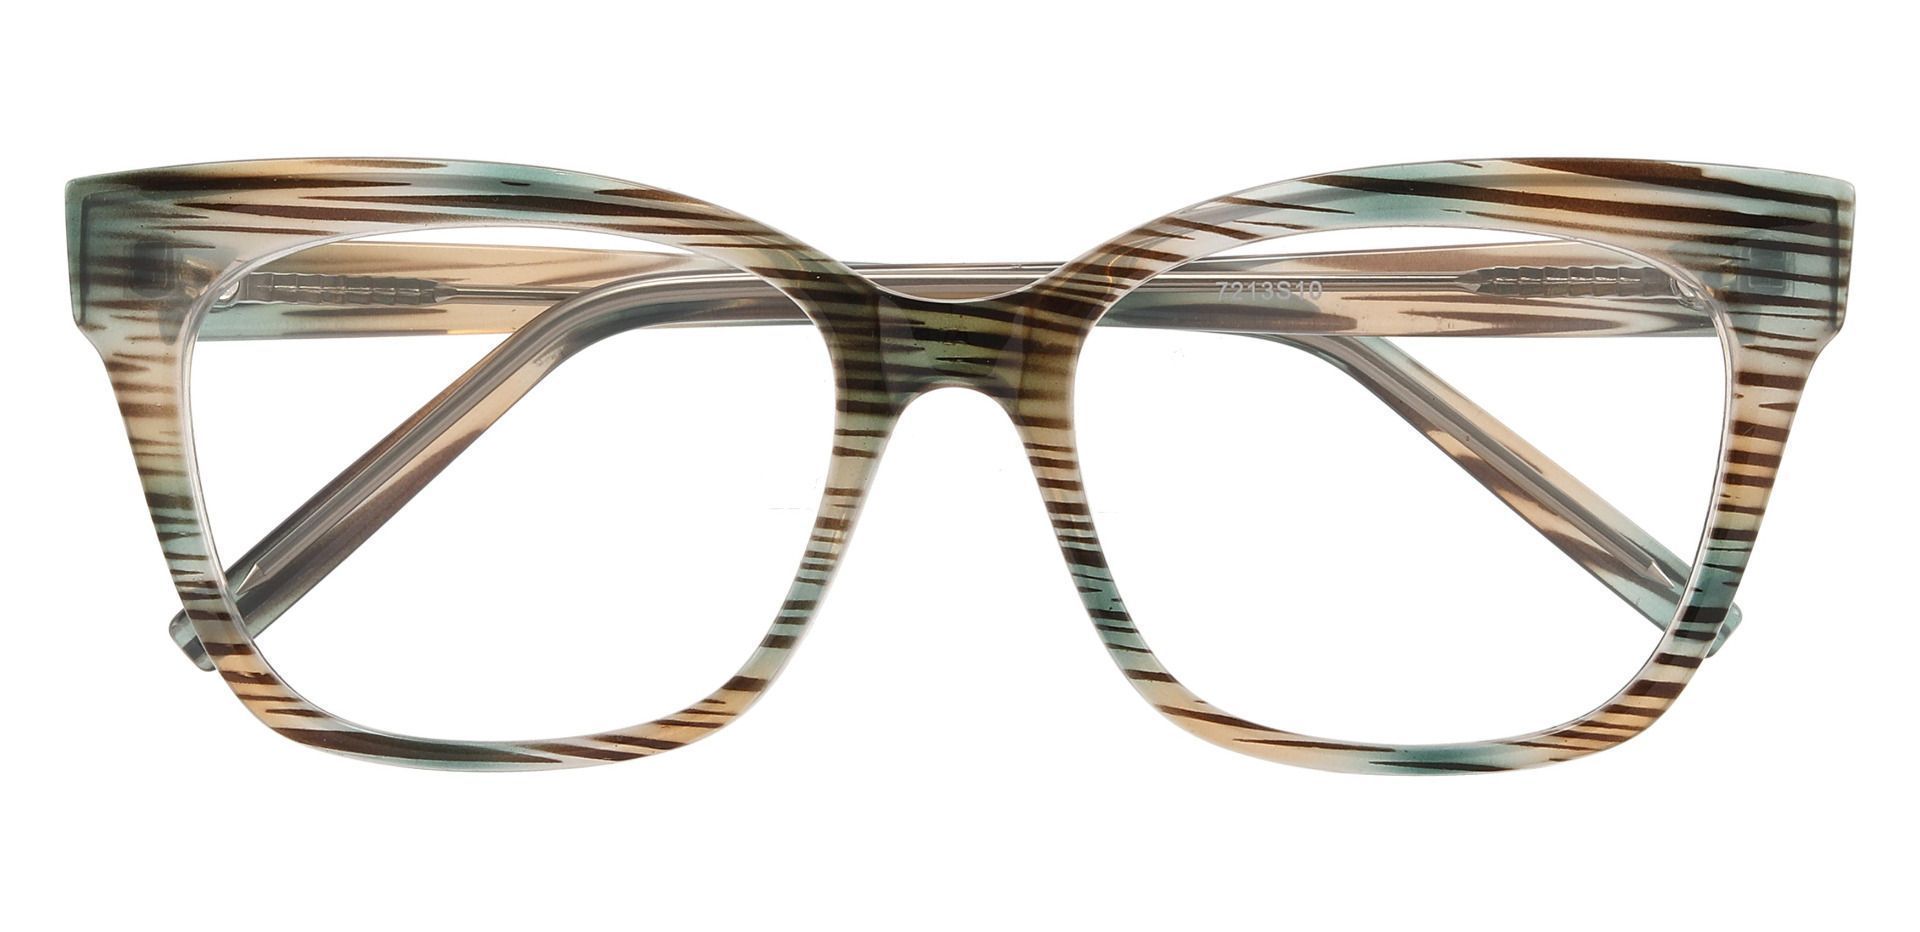 Hera Cat Eye Lined Bifocal Glasses - Striped